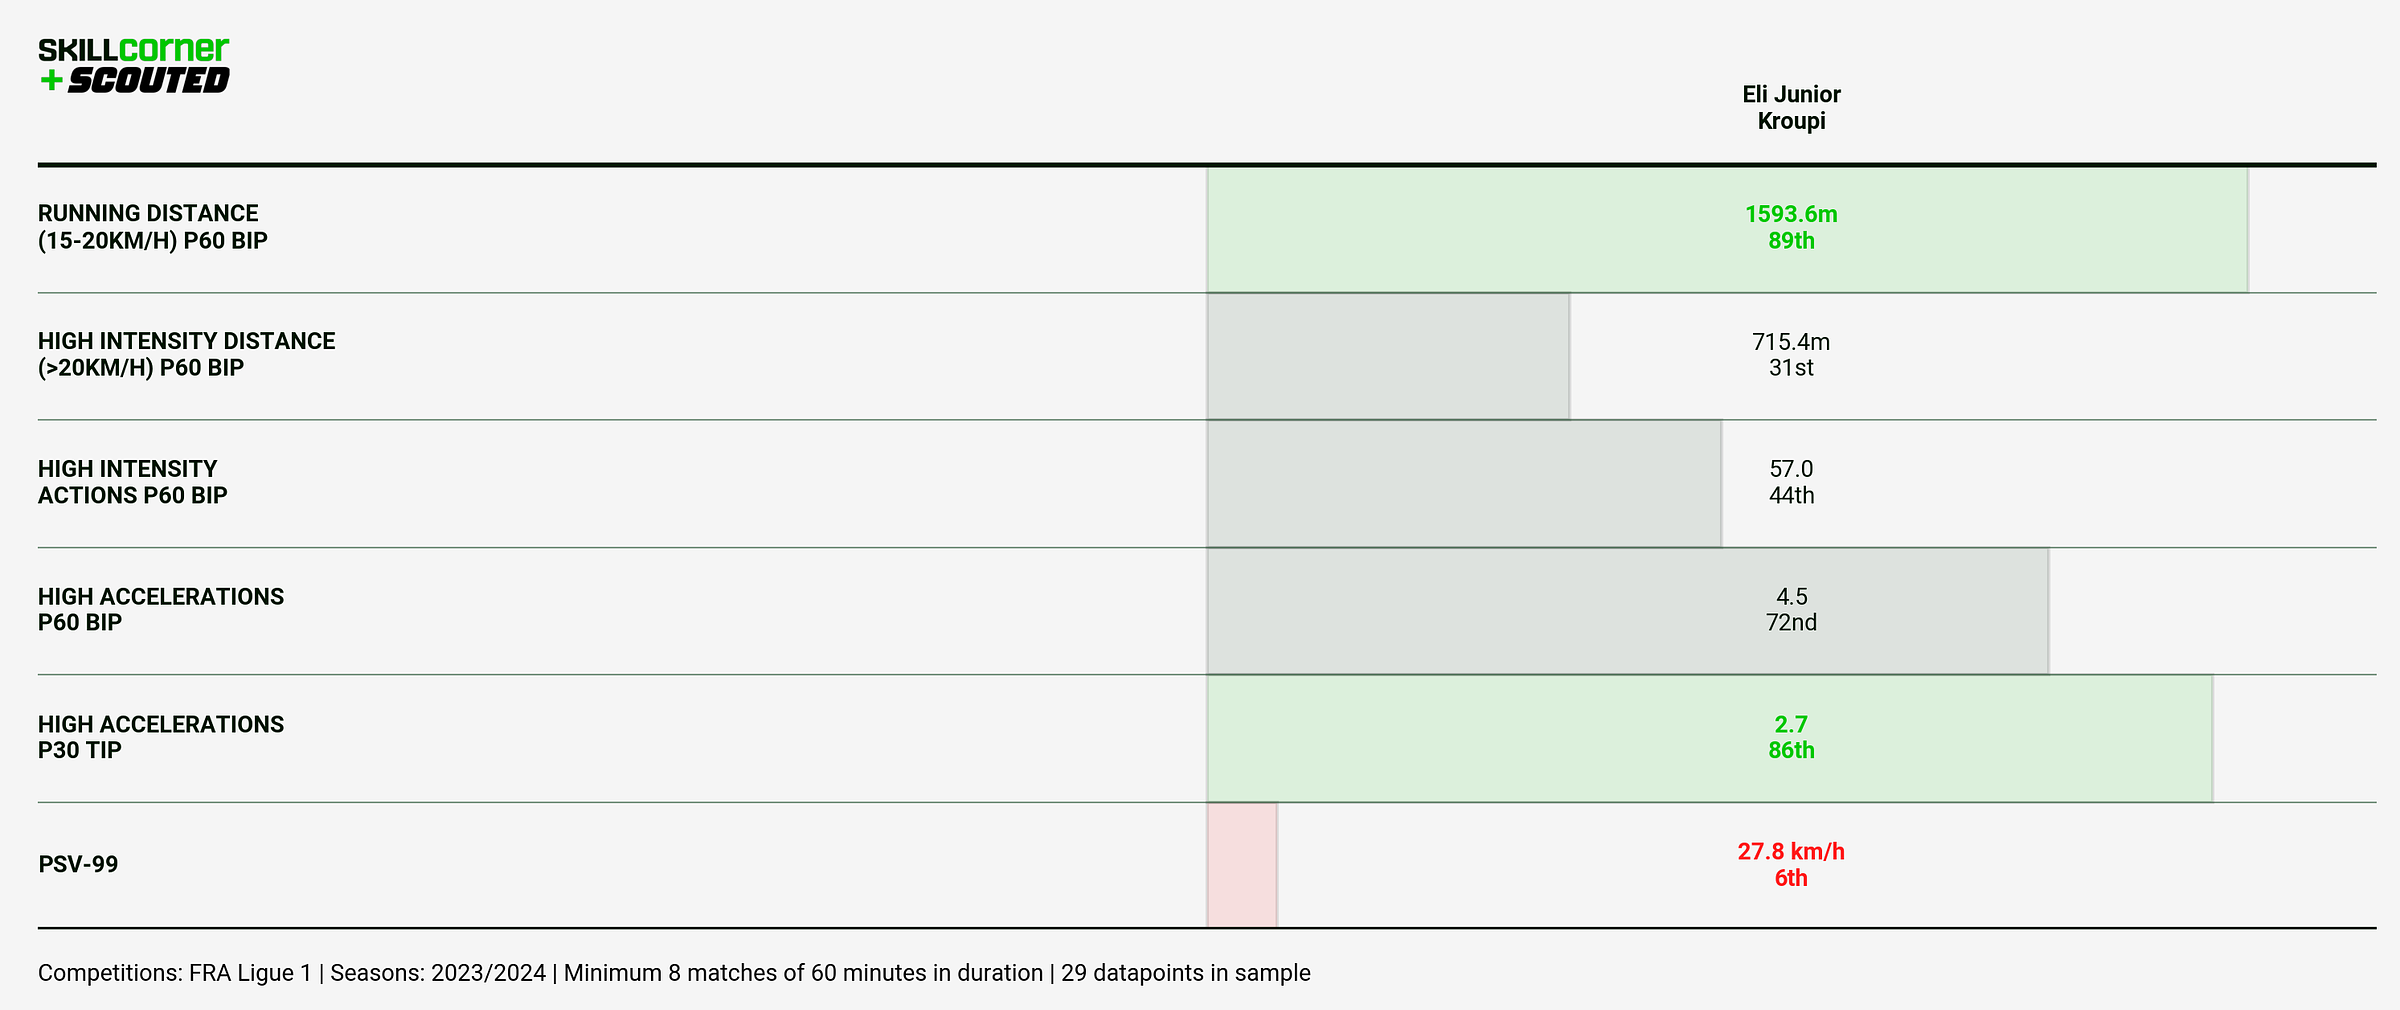 A SCOUTED-SkillCorner bar graph plotting Eli Junior Kroupi's athletic data in Ligue 1